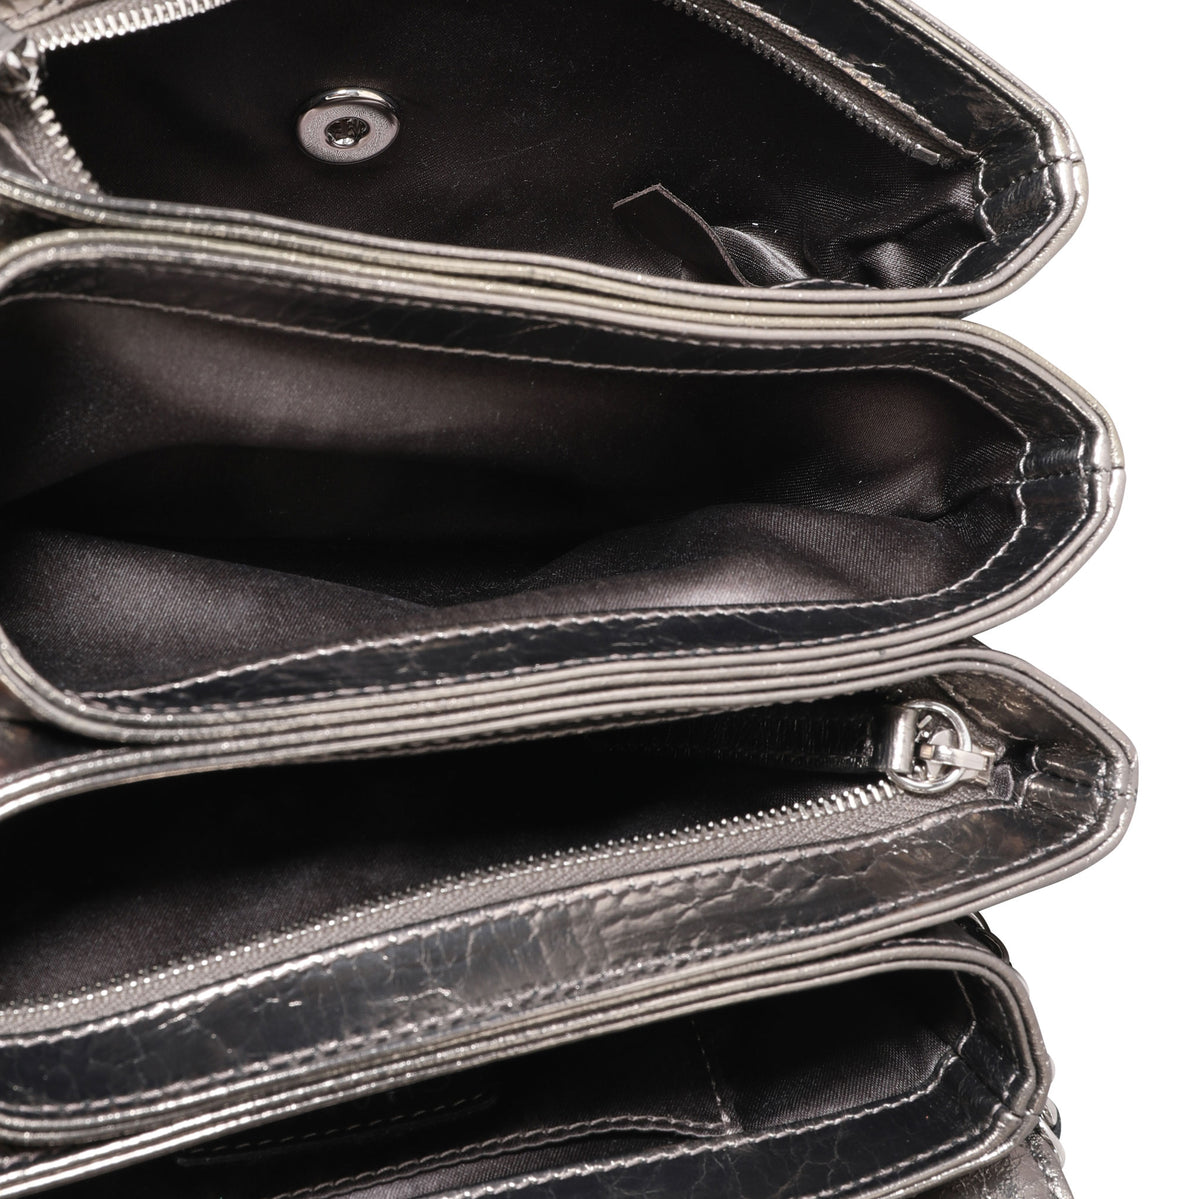 Chanel Metallic Cracked Leather Clams Pocket Accordion Flap Bag